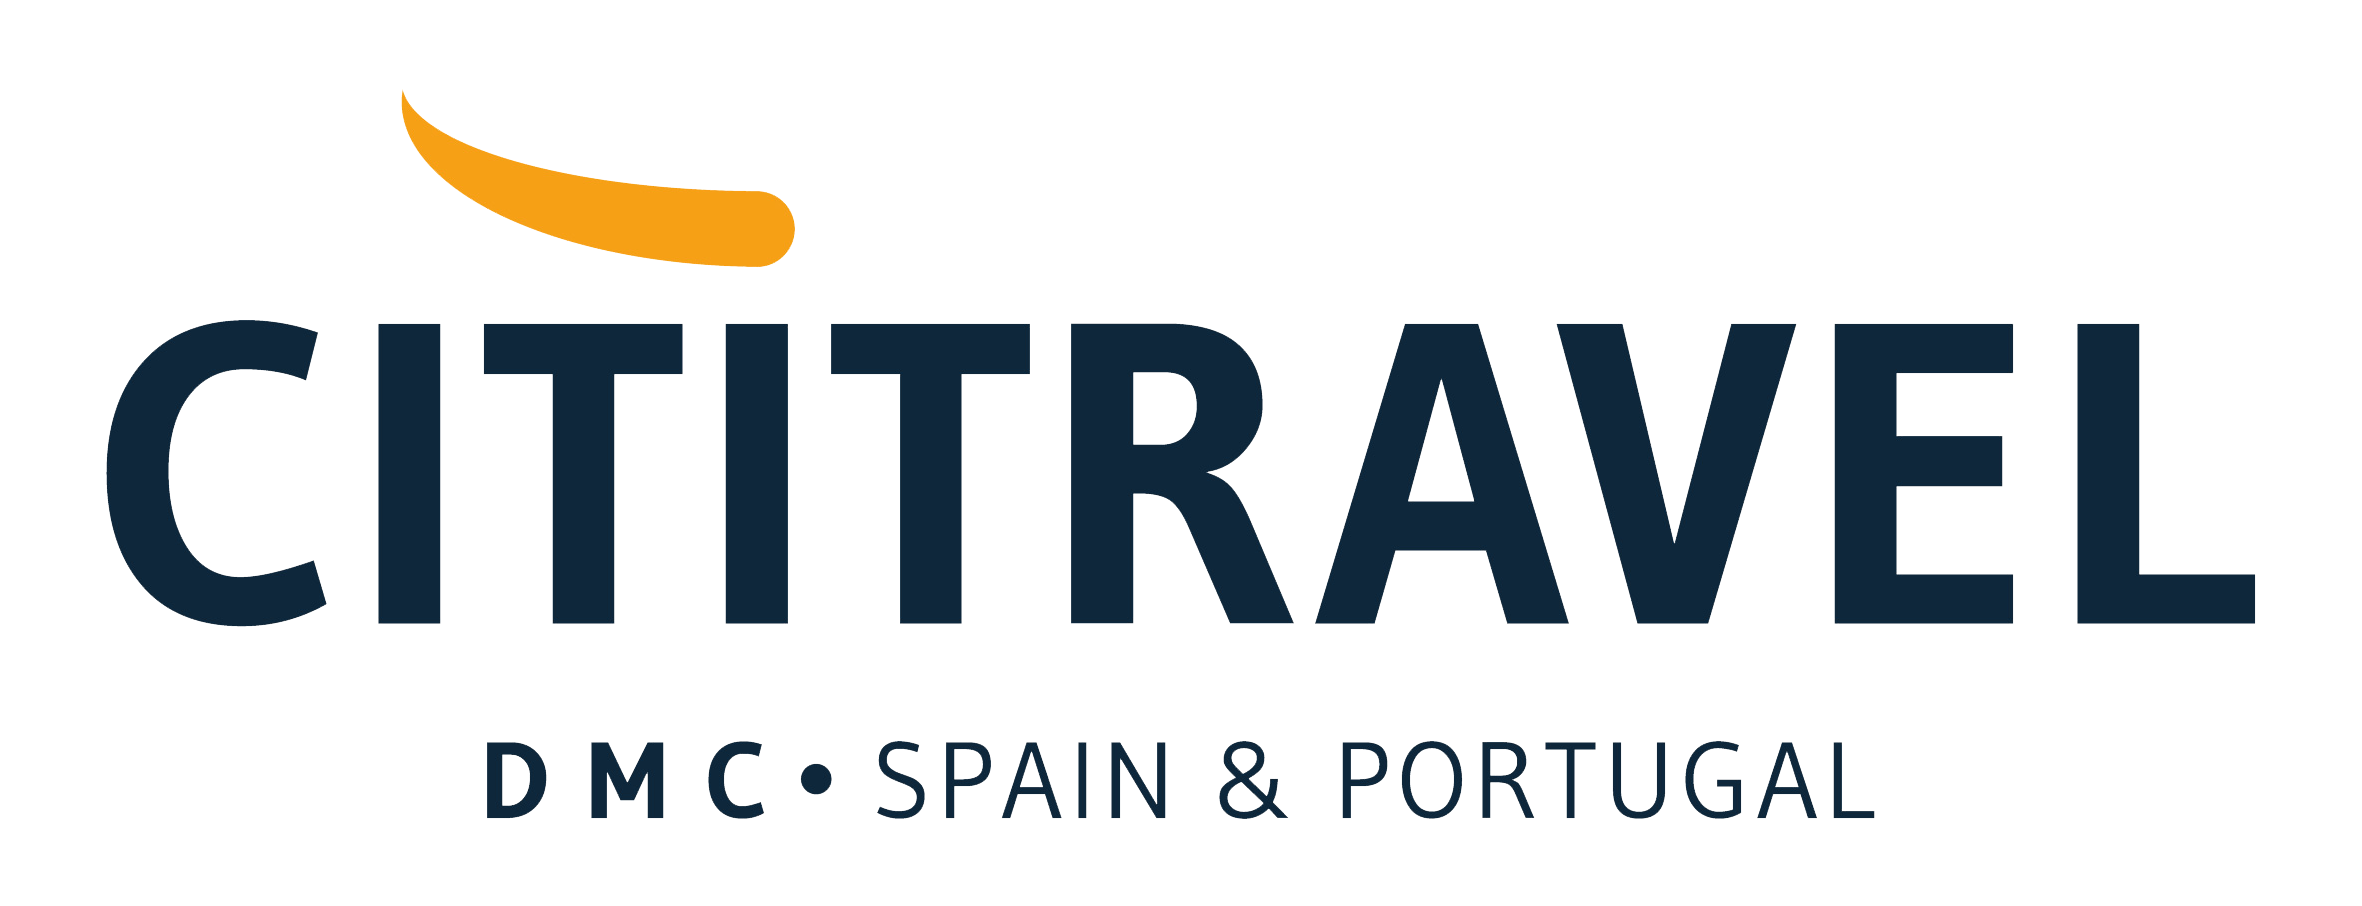 Cititravel Spain & Portugal 